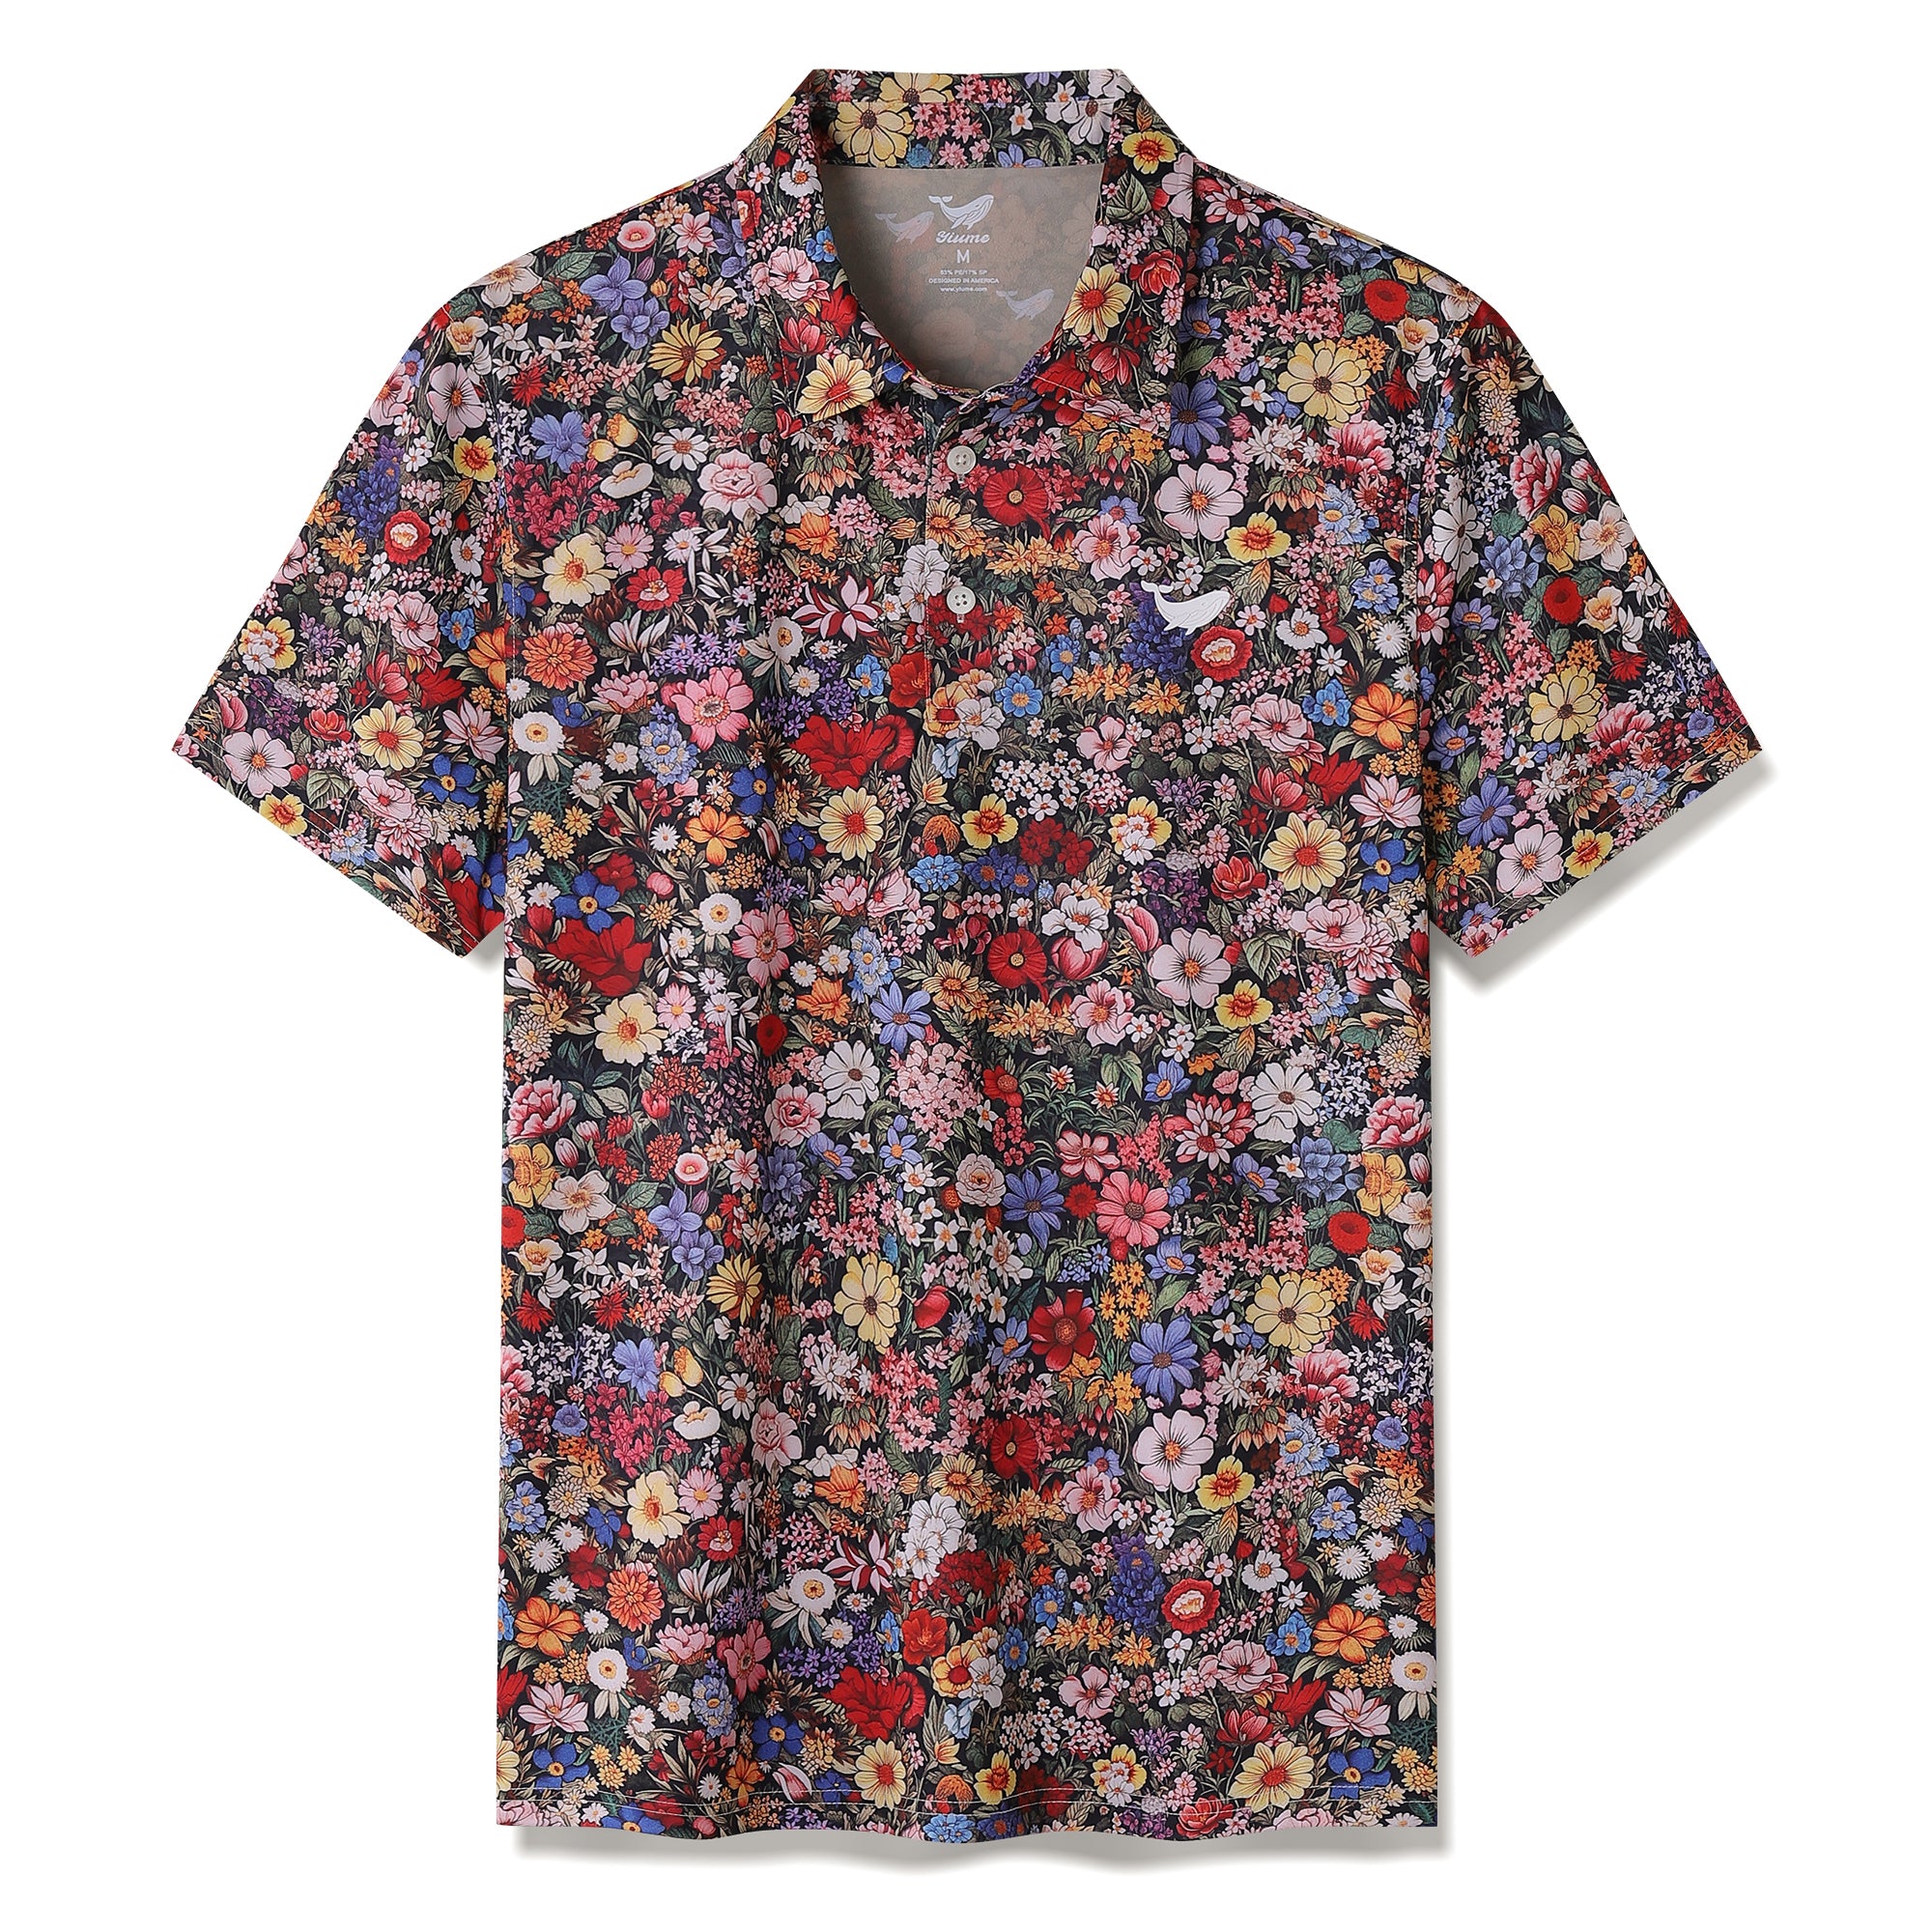 Men's Hawaiian Polo Shirt Among the Flowers Print Short Sleeve Golf Shirt